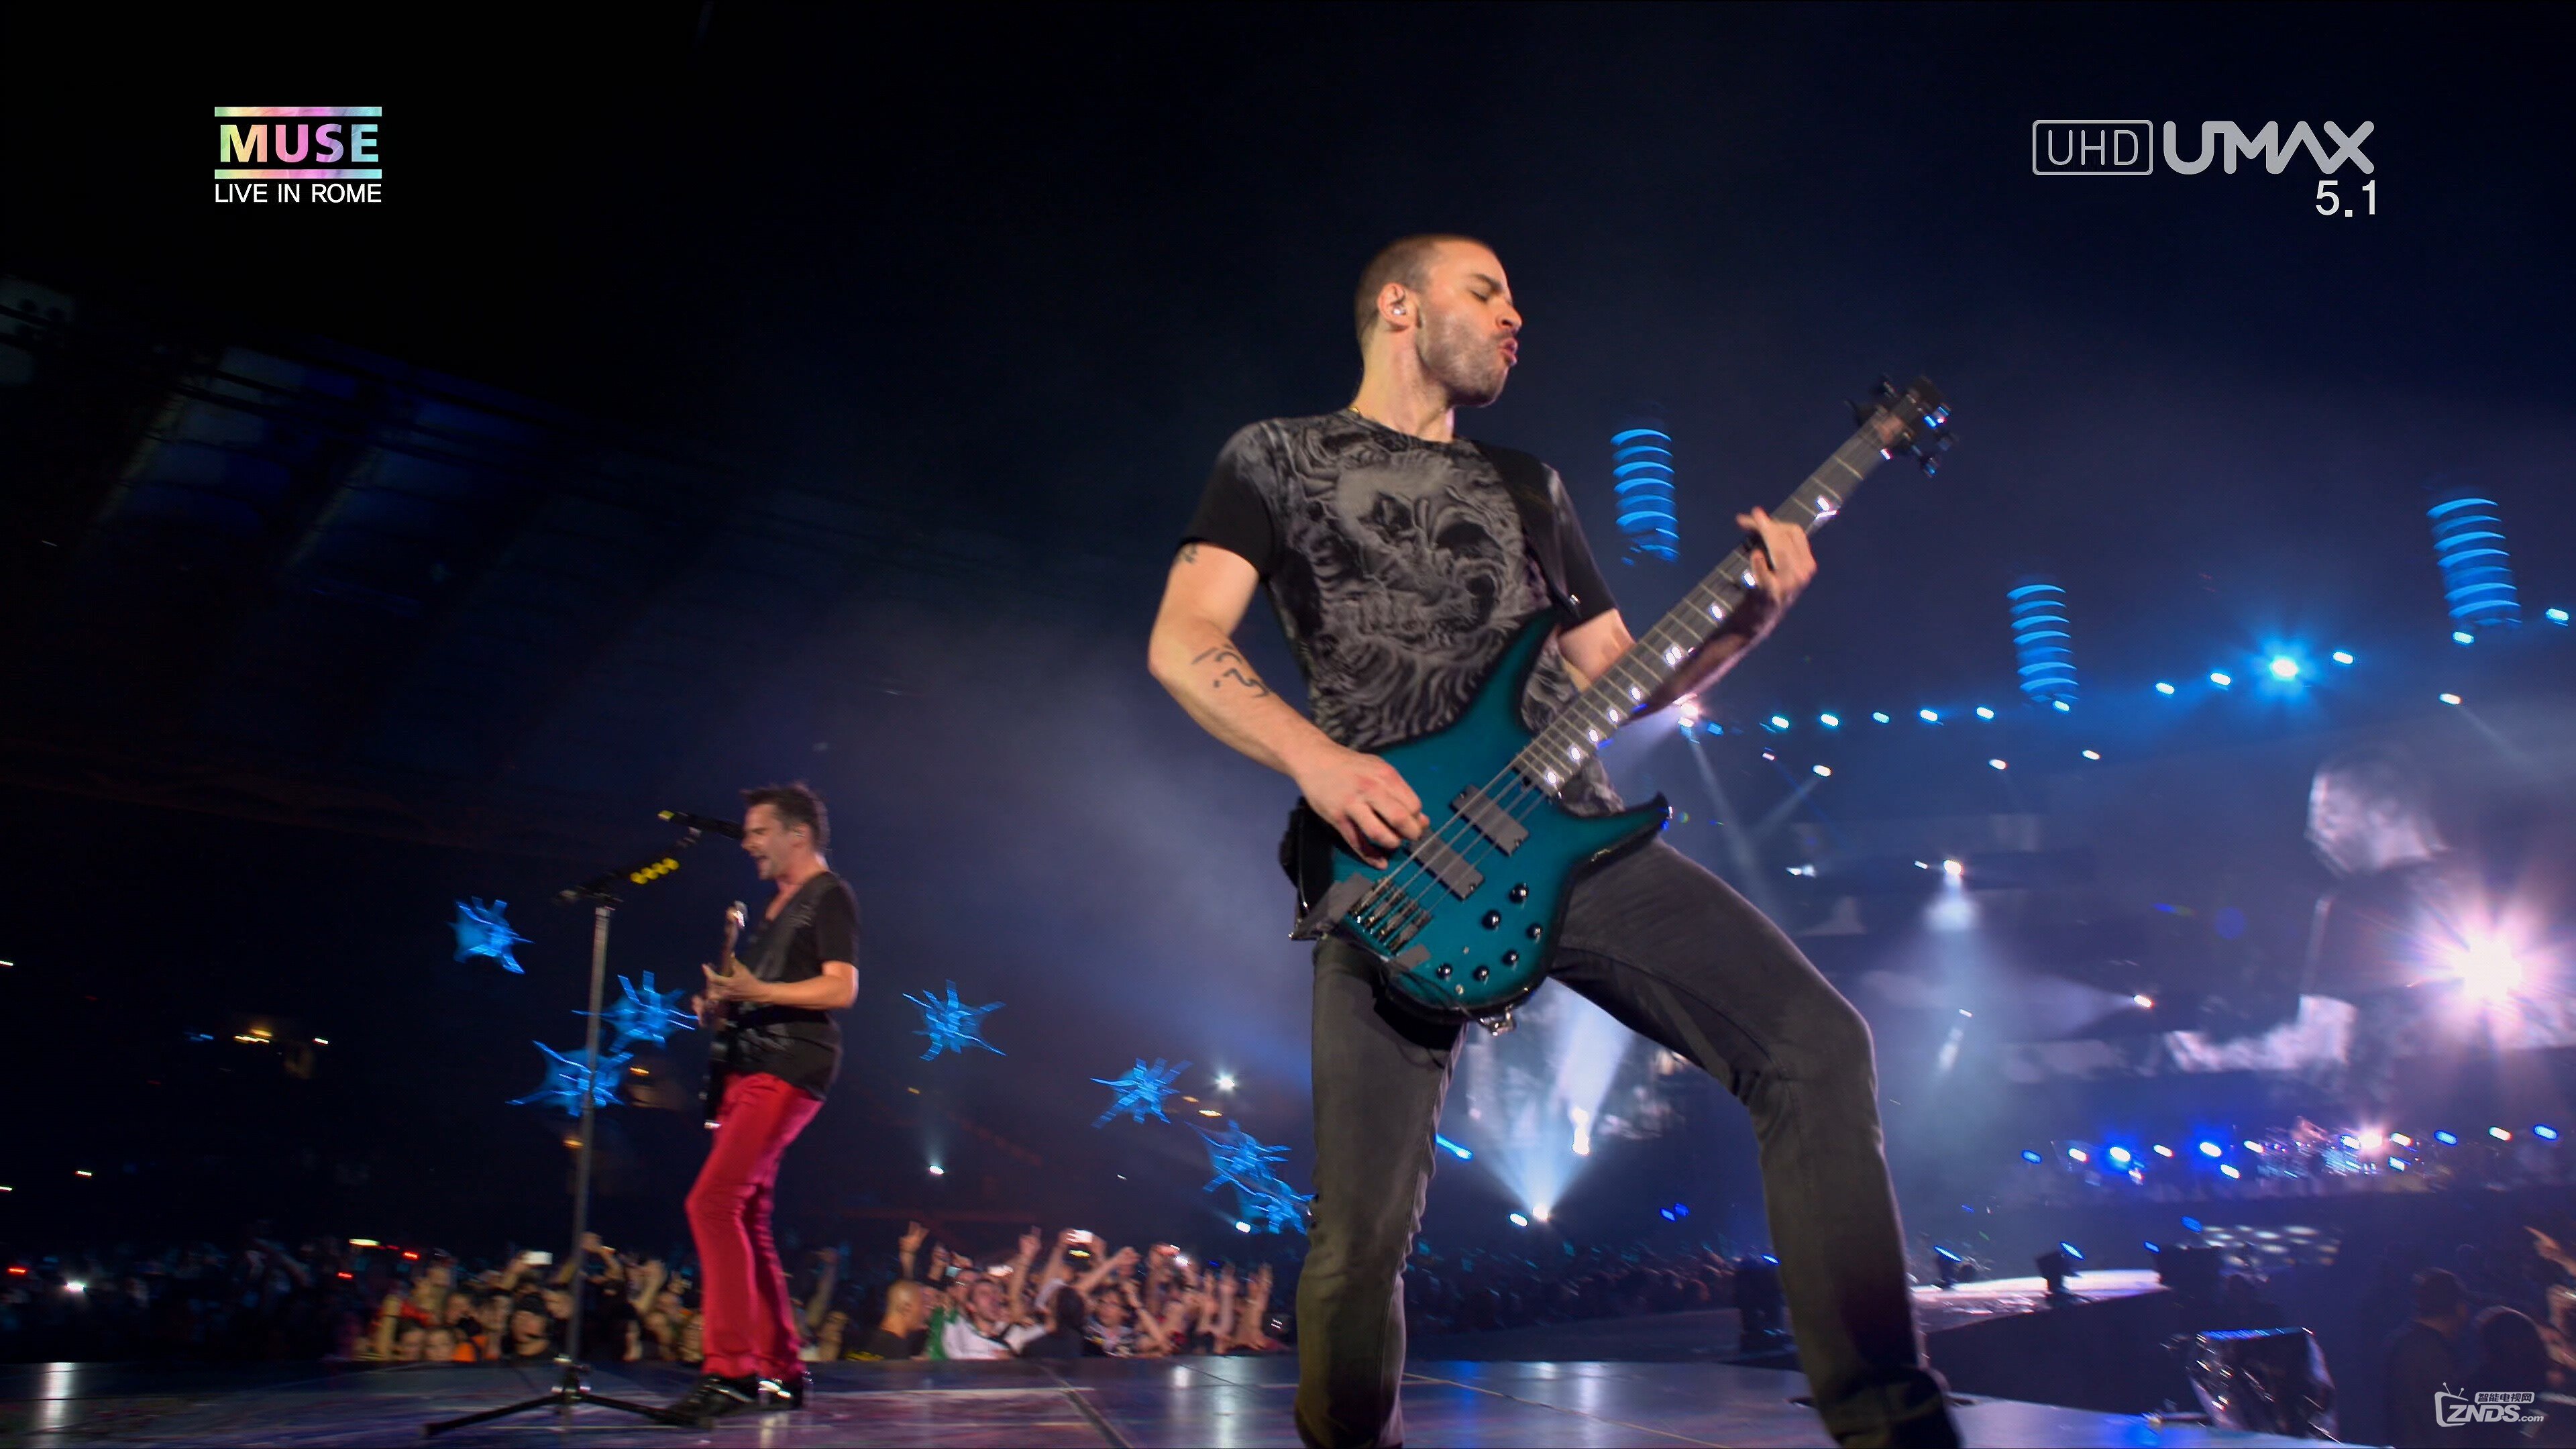 Muse.Live.At.Rome.Olympic.Stadium.2013.2160p.UHDTV.HEVC.mkv_20160312_235258.531.jpg